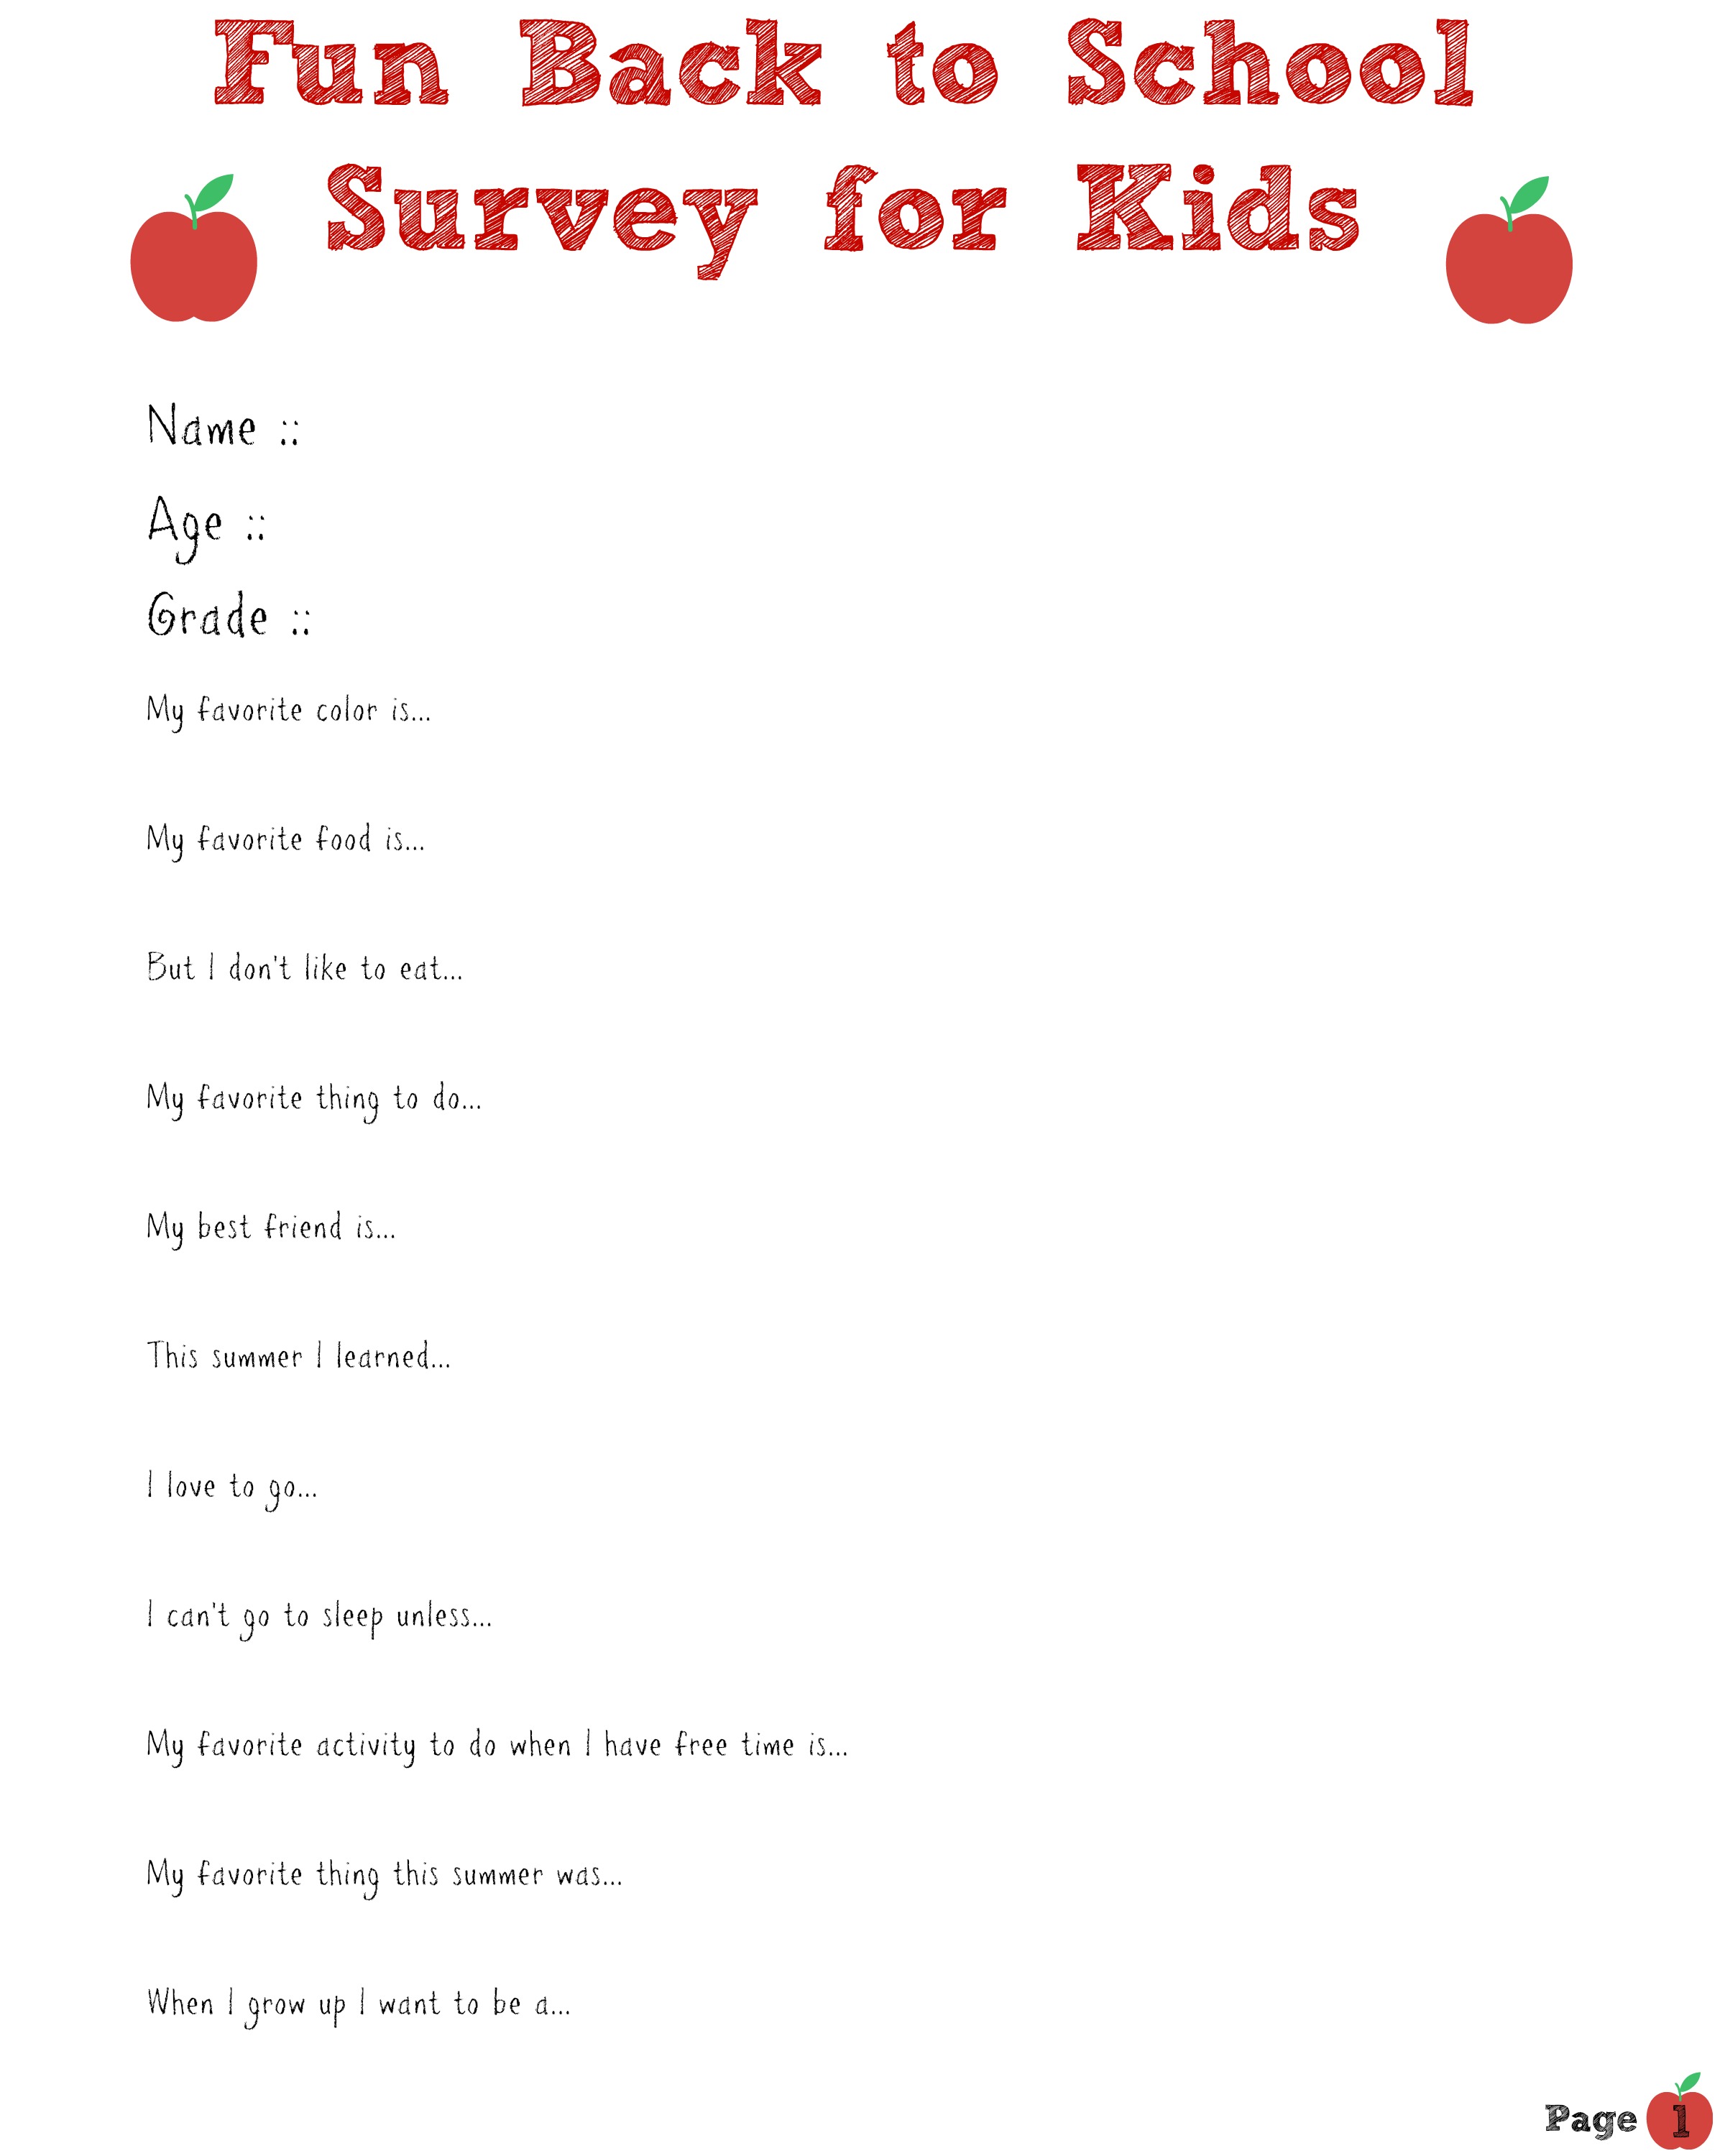 Surveys for kids